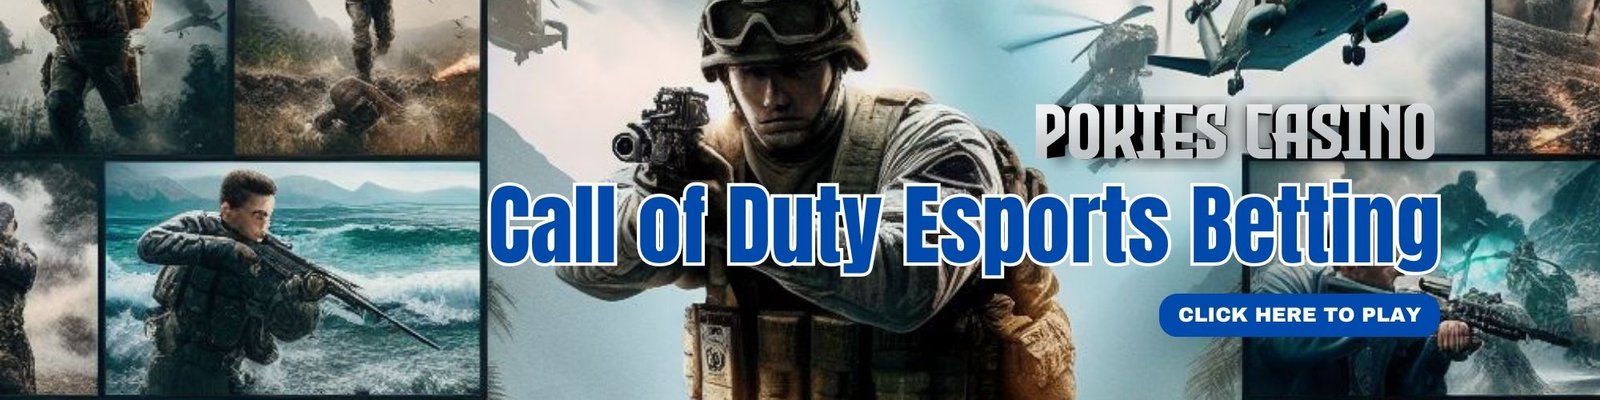 Call of Duty Esports Betting in PokiesCasino